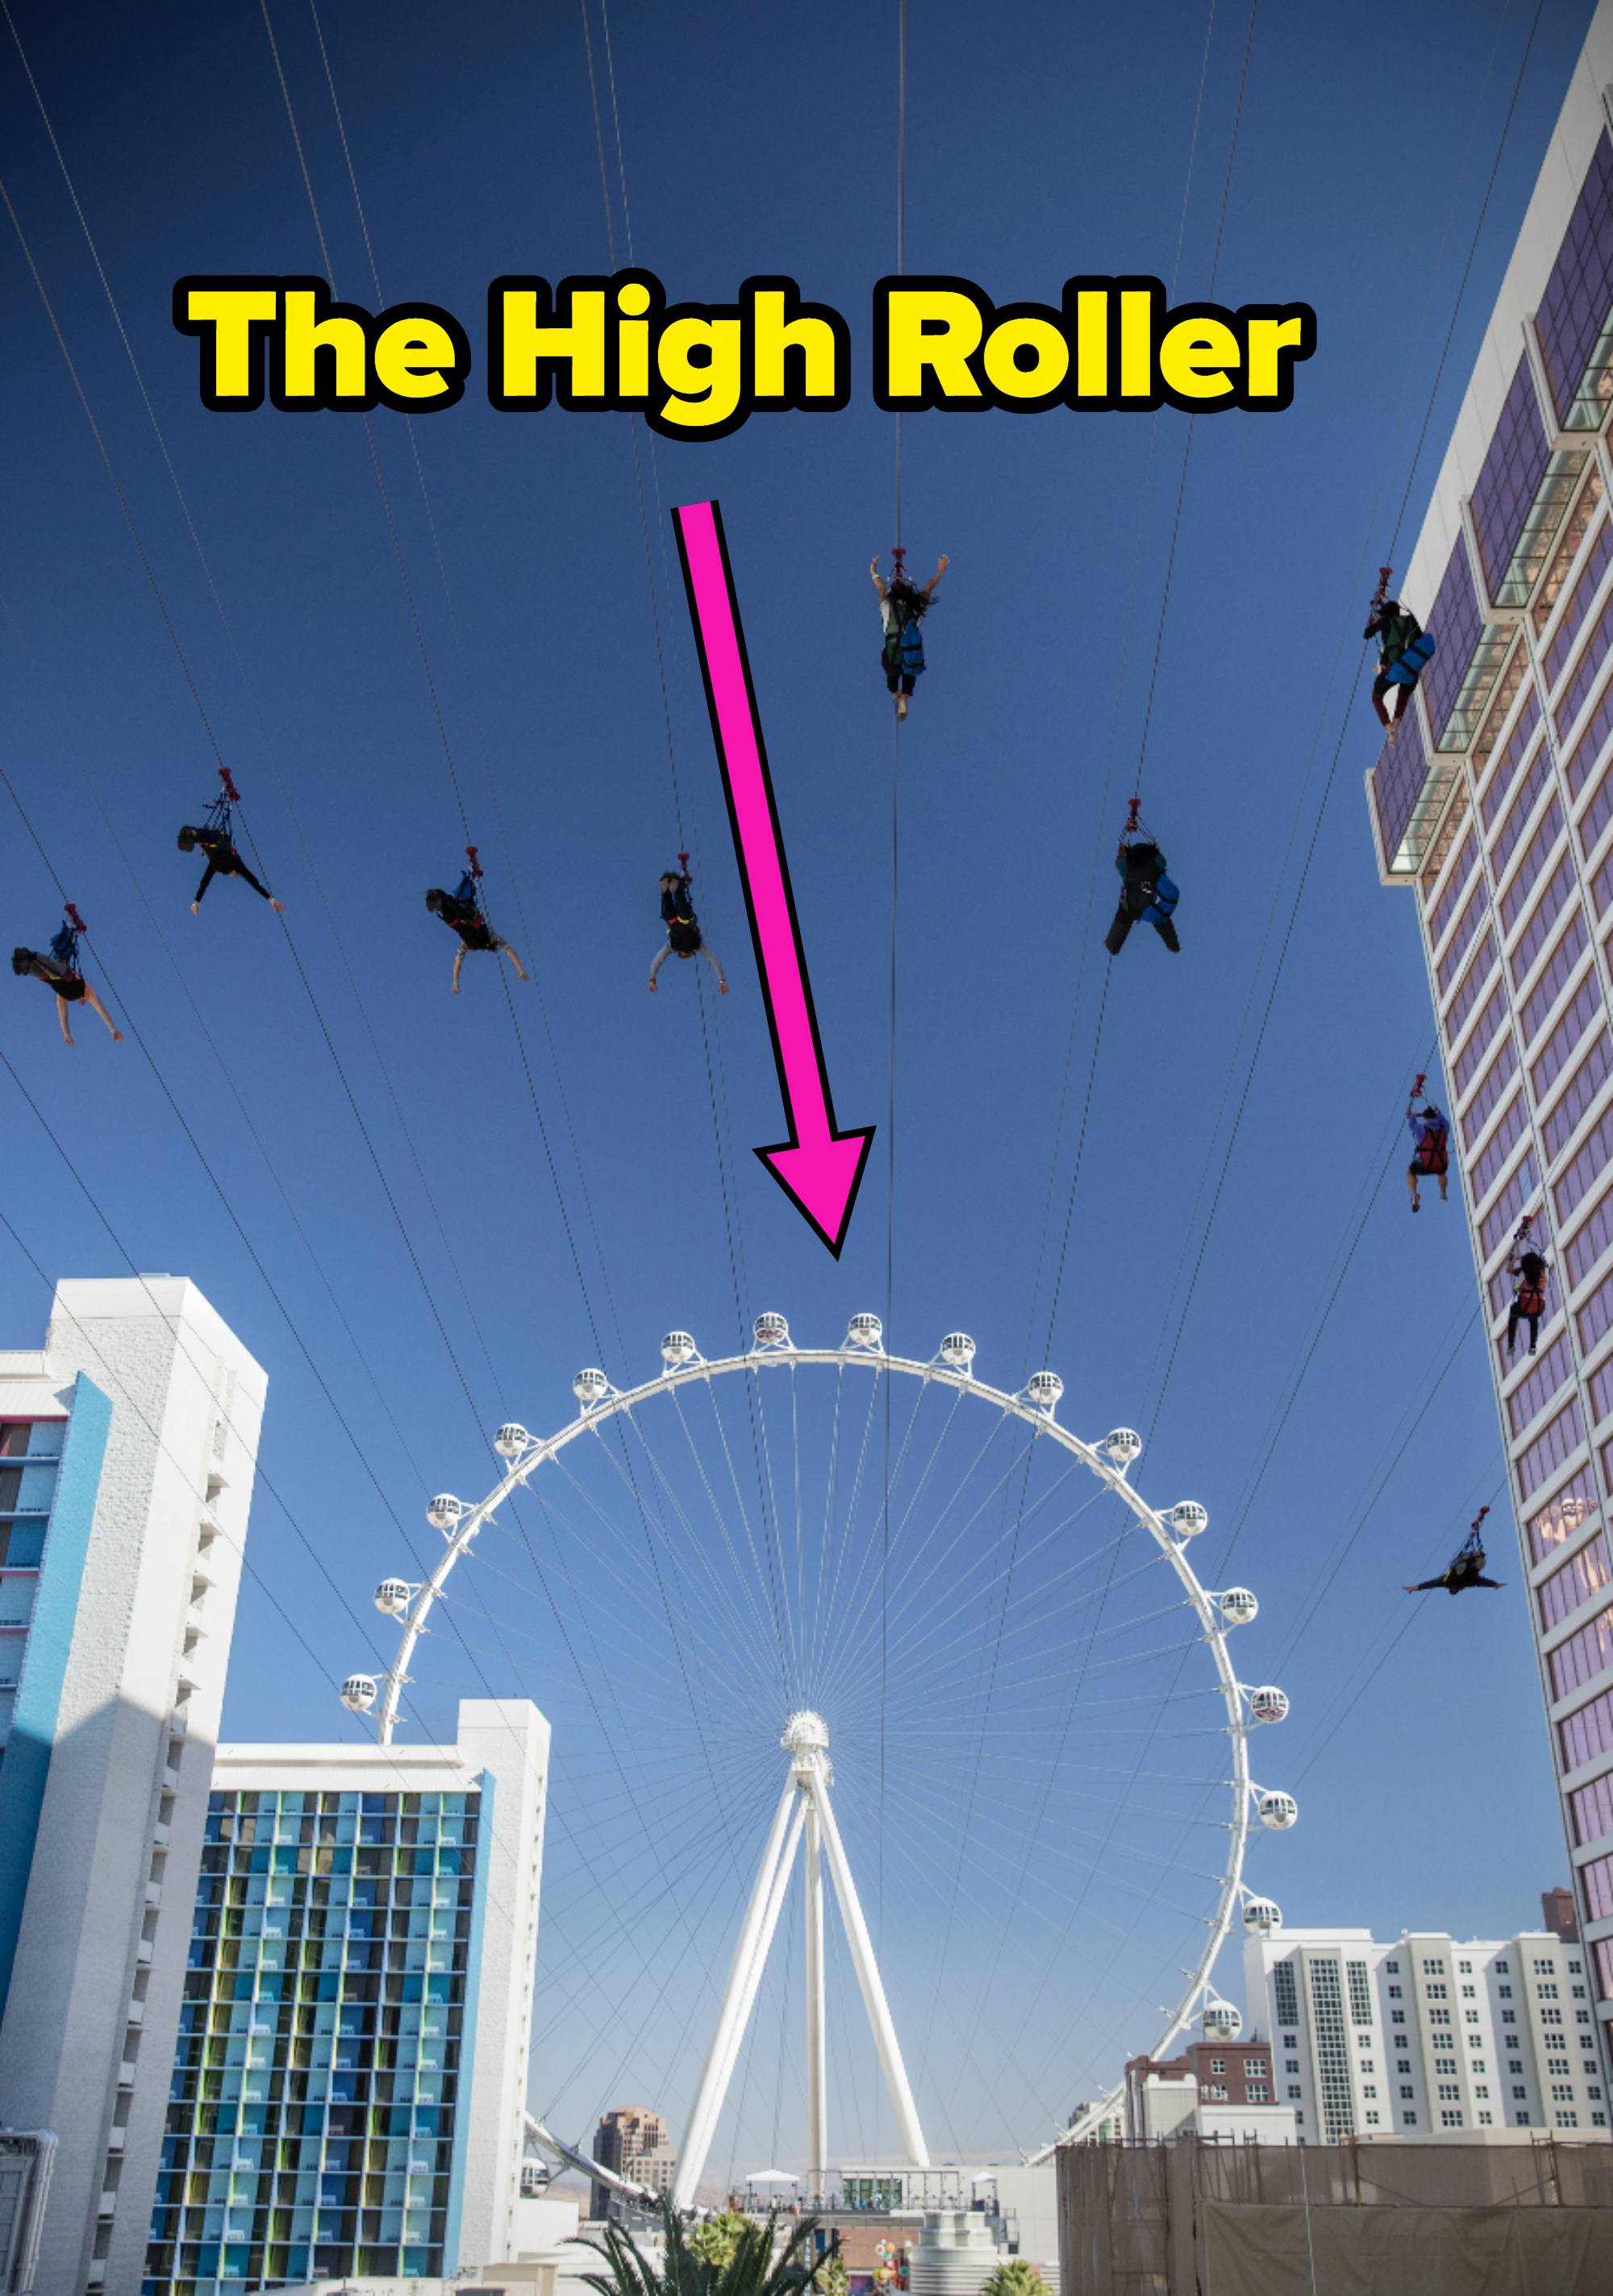 The High Roller wheel in Las Vegas